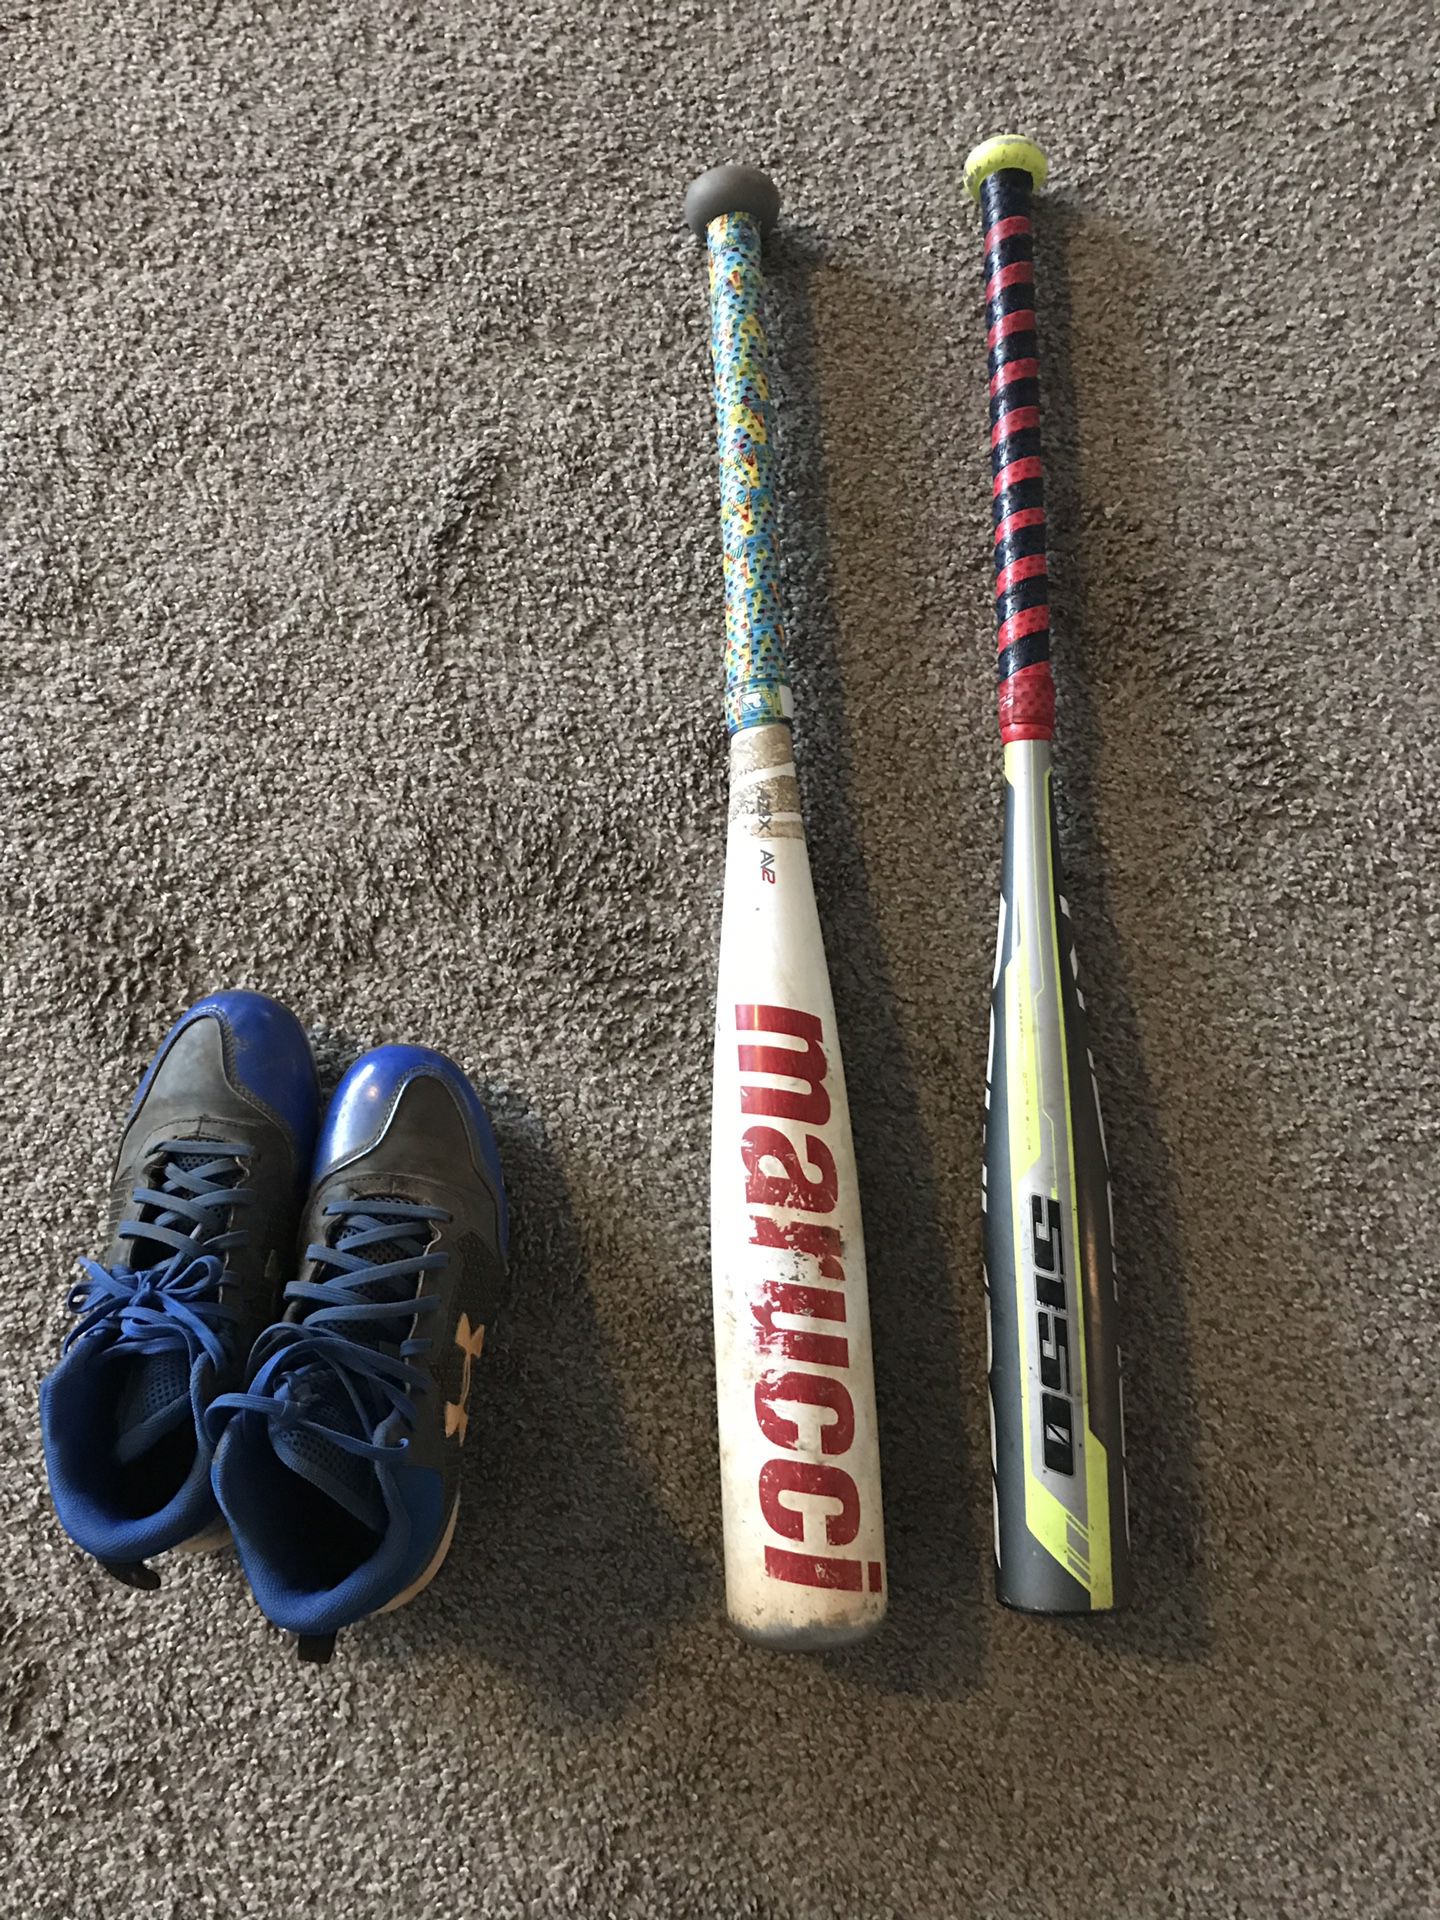 Rawlings Baseball Bat and Cleats (Marucci Is SOLD)